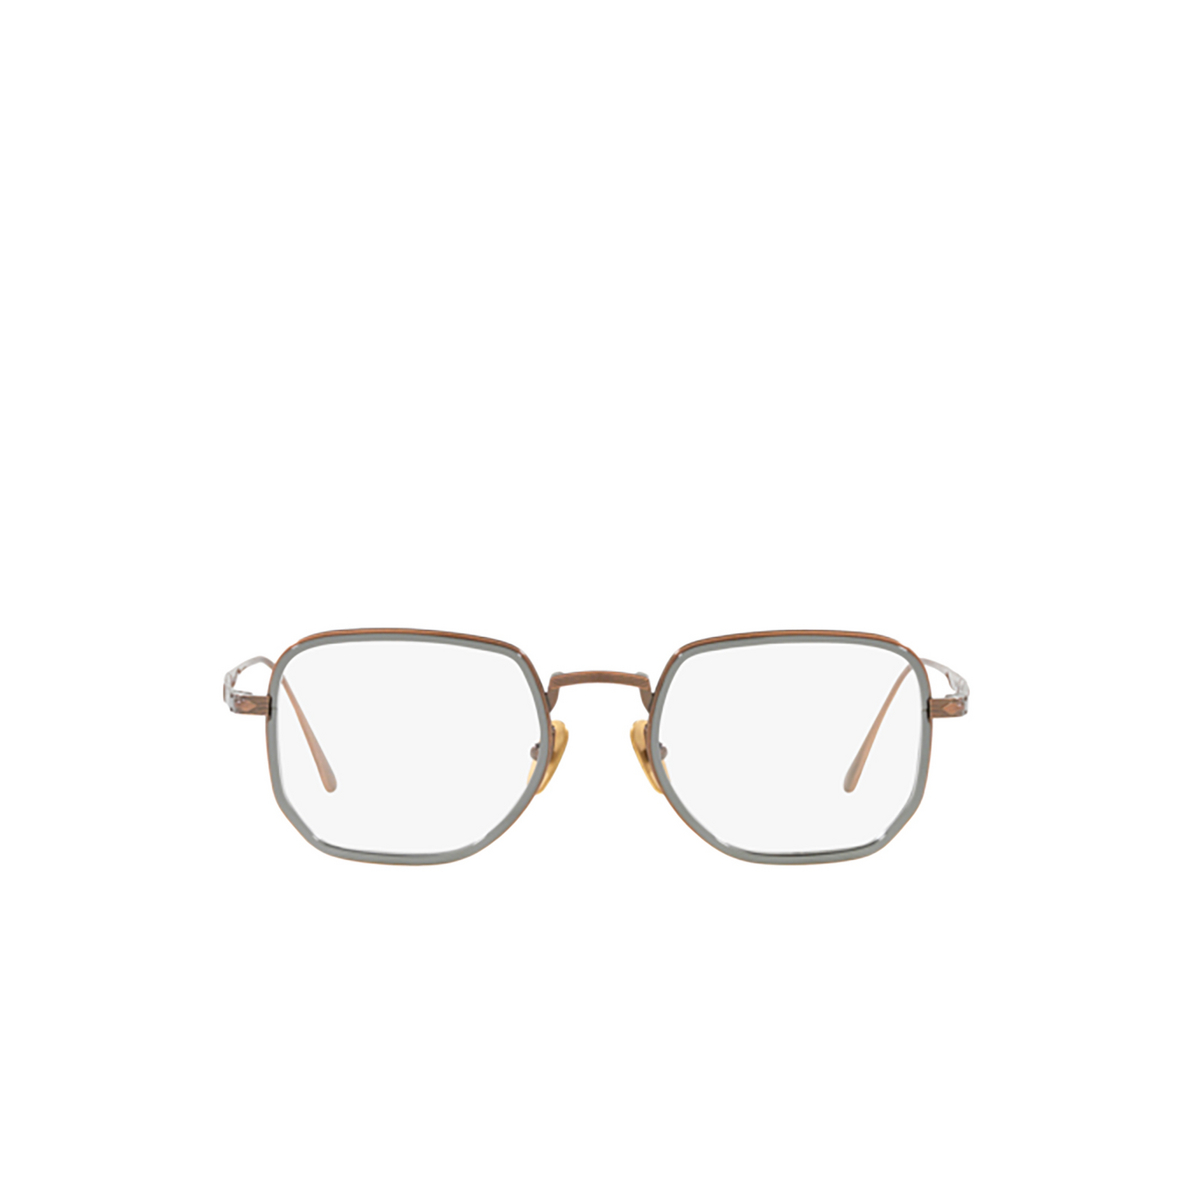 Persol PO5006VT Eyeglasses 8007 Brown/gunmetal - front view